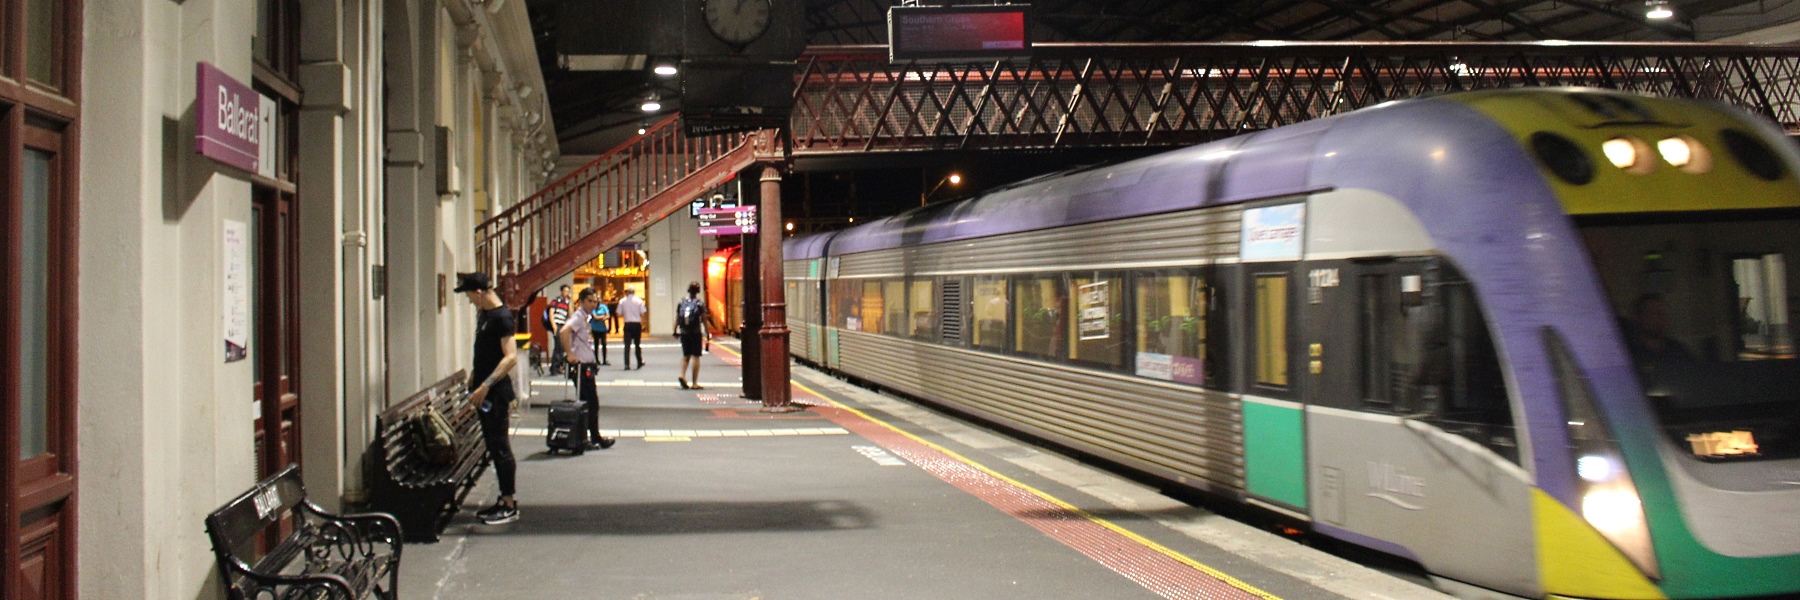 Ballarat station